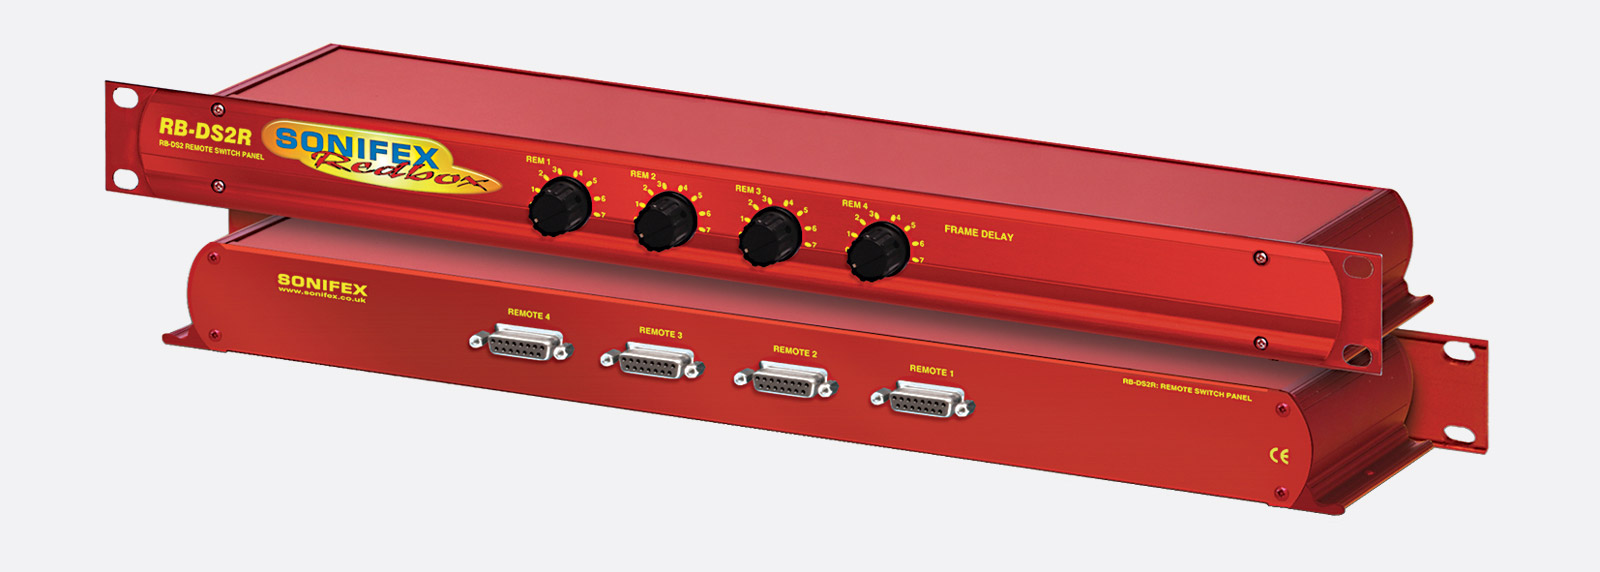 SONIFEX RB-DA6RG AMPLI DE DISTRIBUTION audio, 2x XLR, RJ45, 2x entrées RCA,  6x sorties RJ45